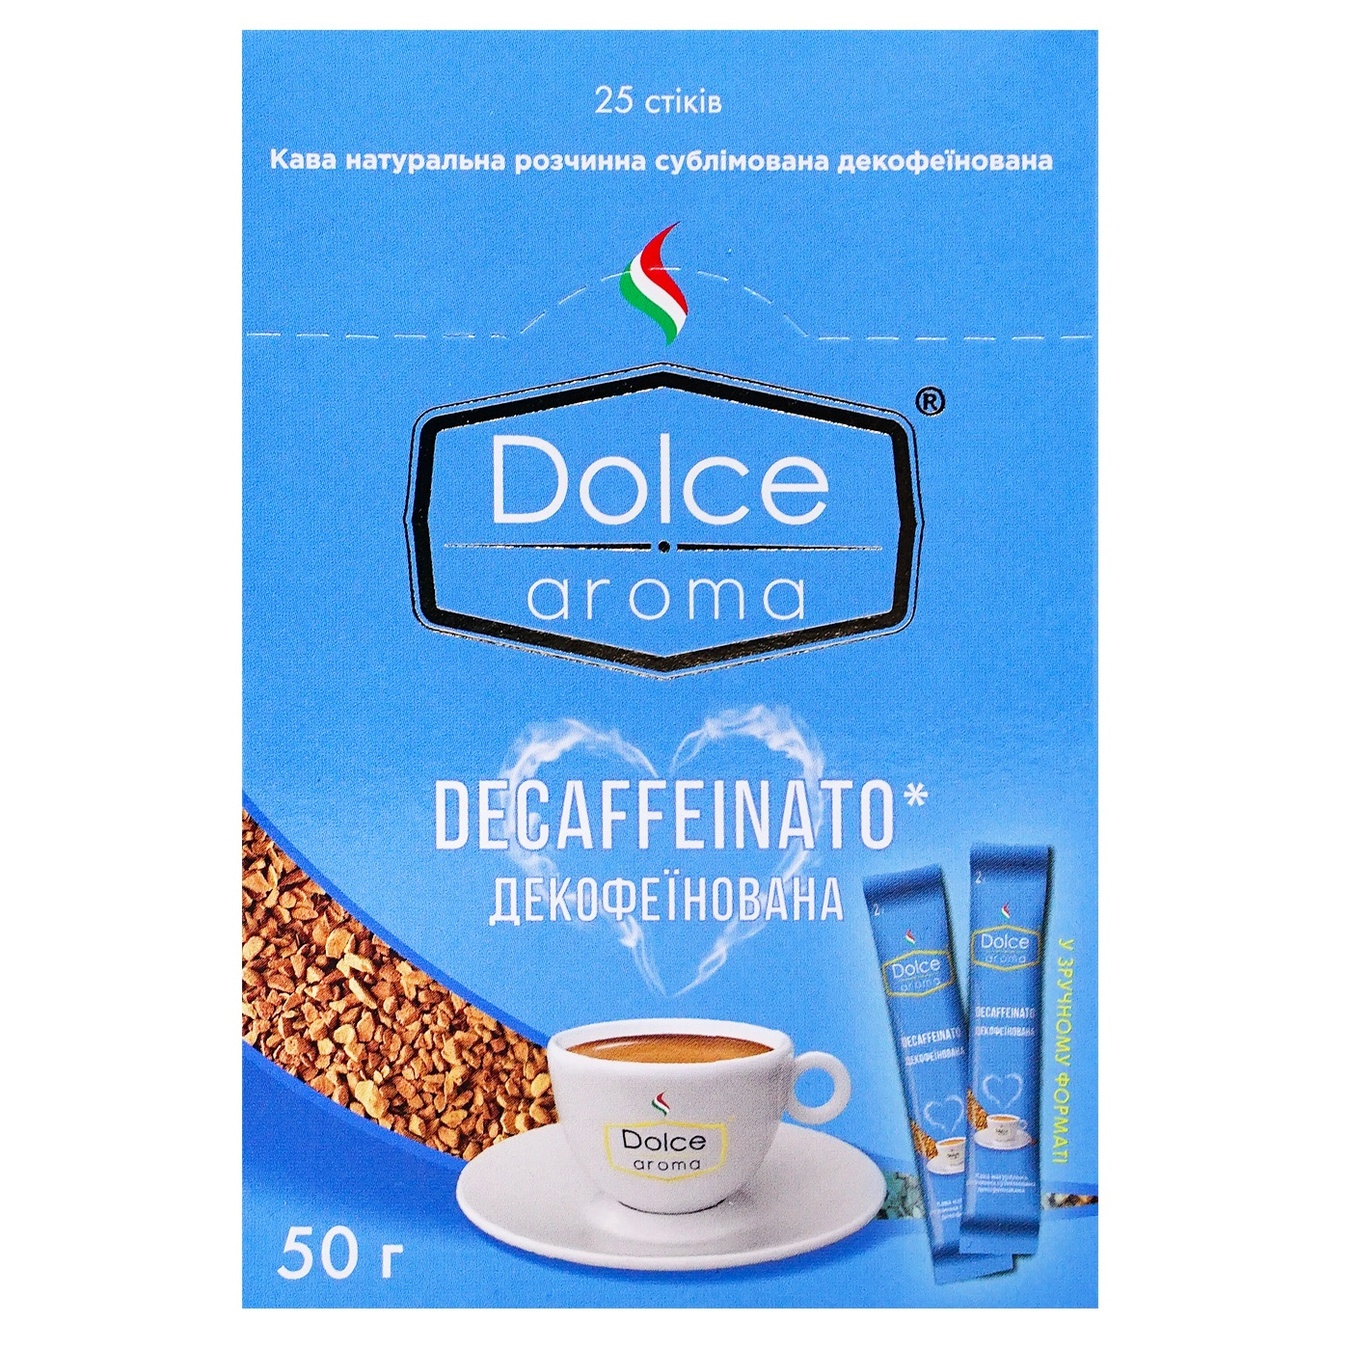 Кава Dolce Aroma Decaffeinato розчинна сублімована 50 г